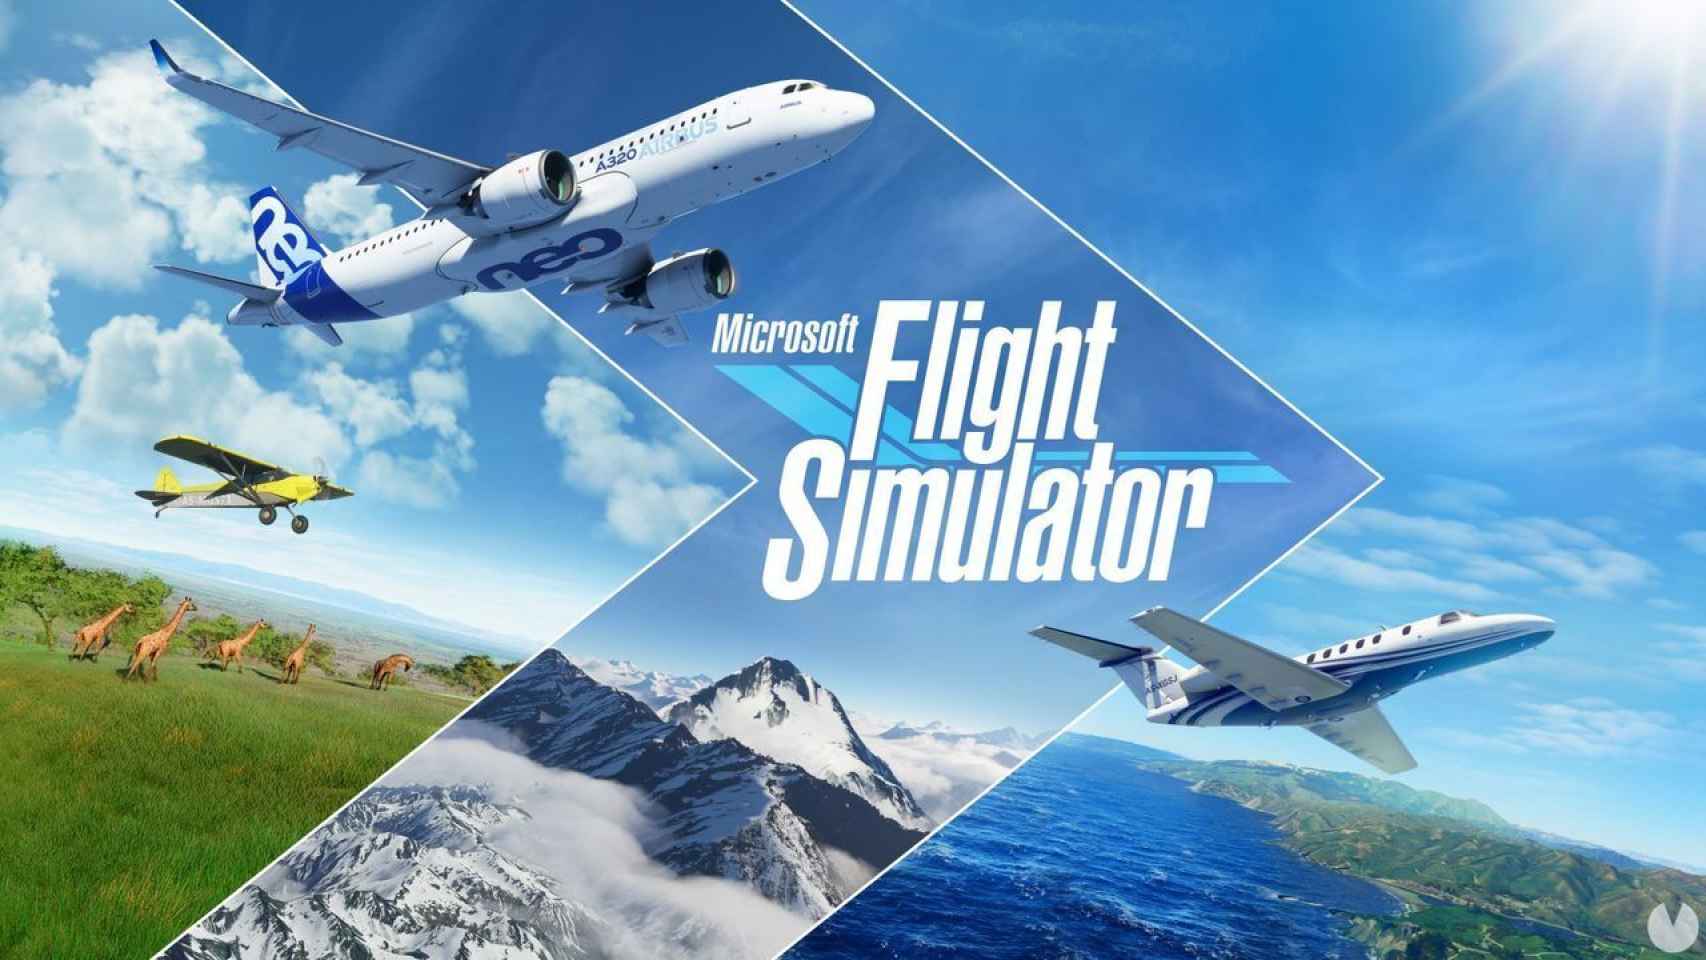 Requisitos de Microsoft Flight Simulator: ¿qué PC necesitas para